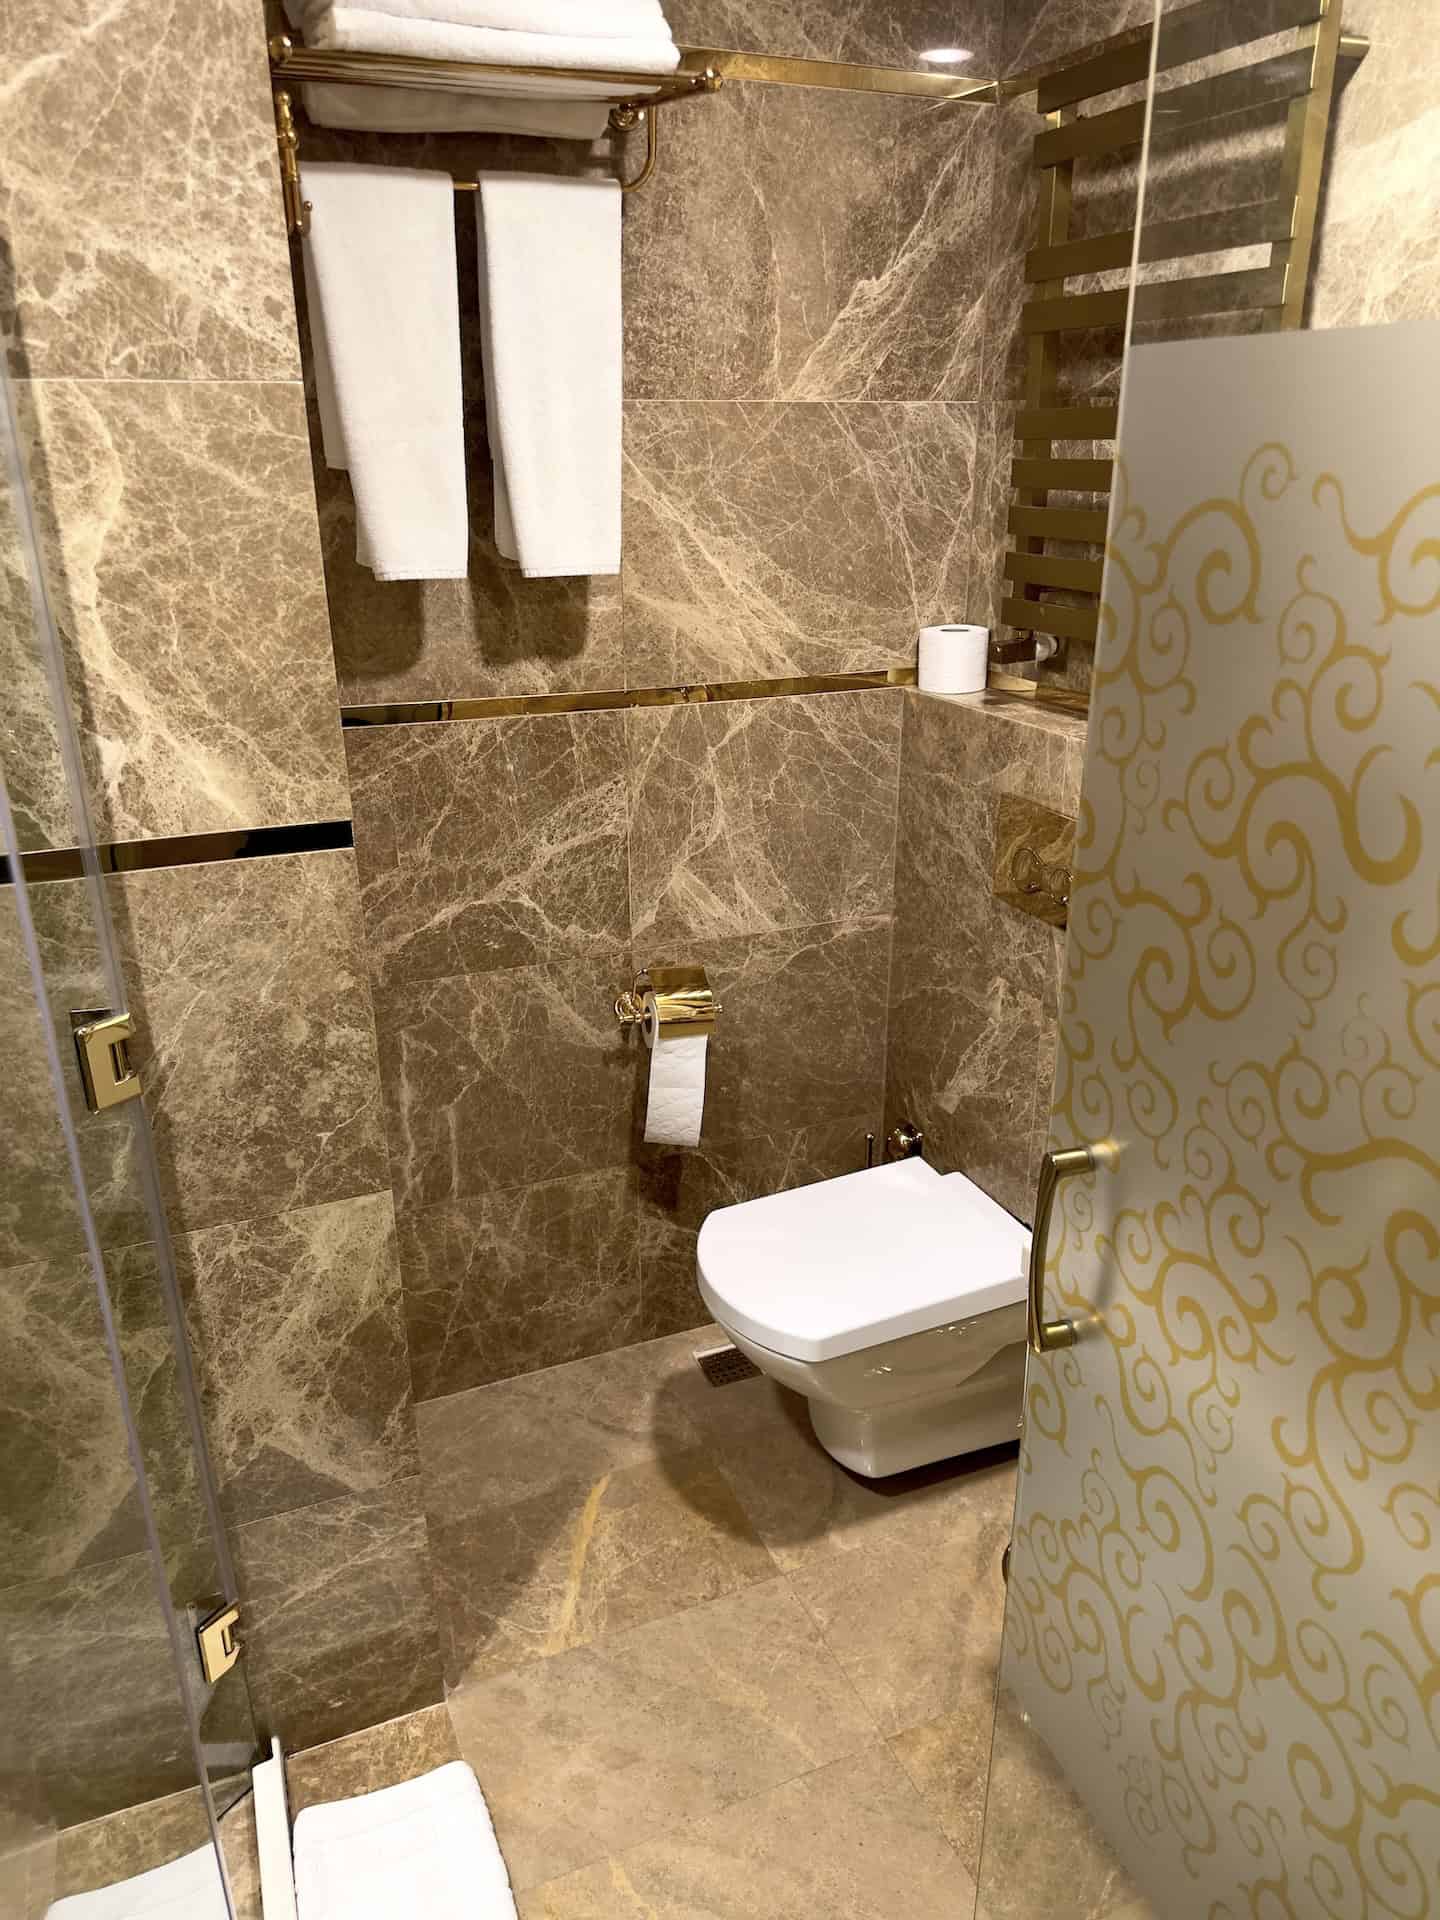 Bathroom at the Million Stone Hotel